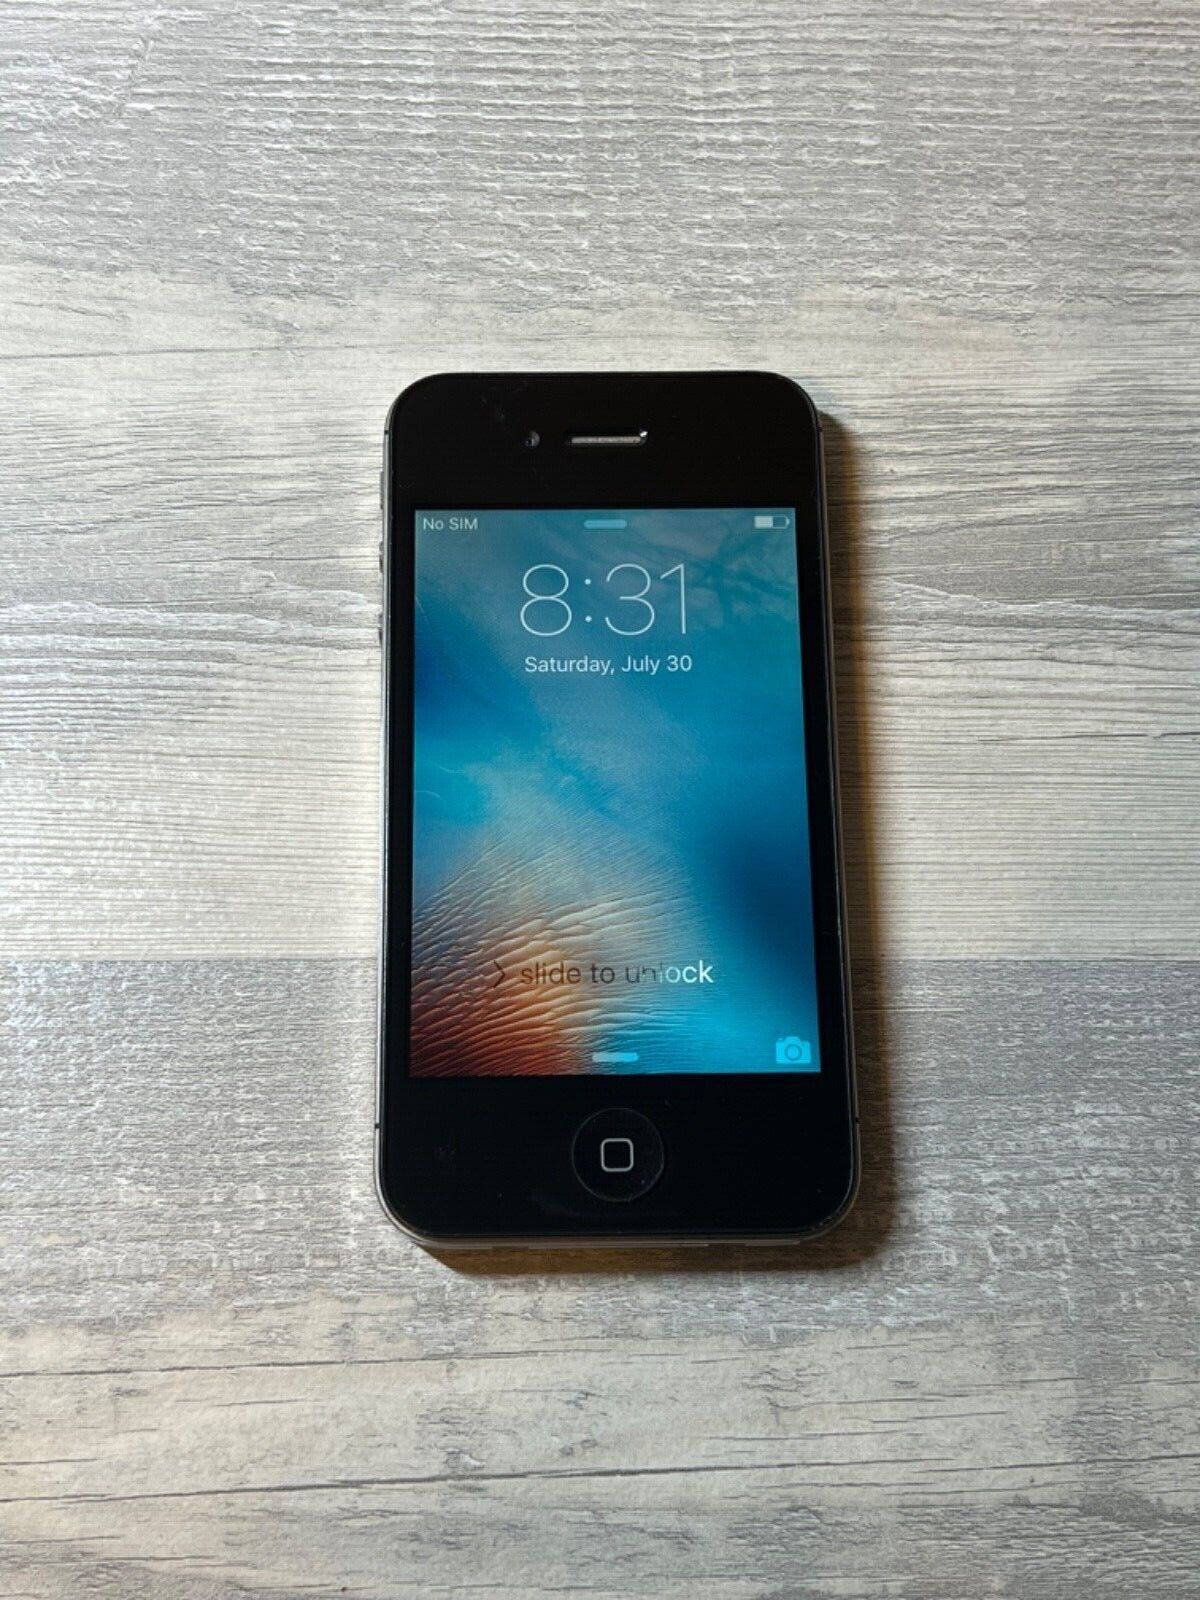 Apple iPhone 4s Unlocked Smartphone 16GB - Black & White